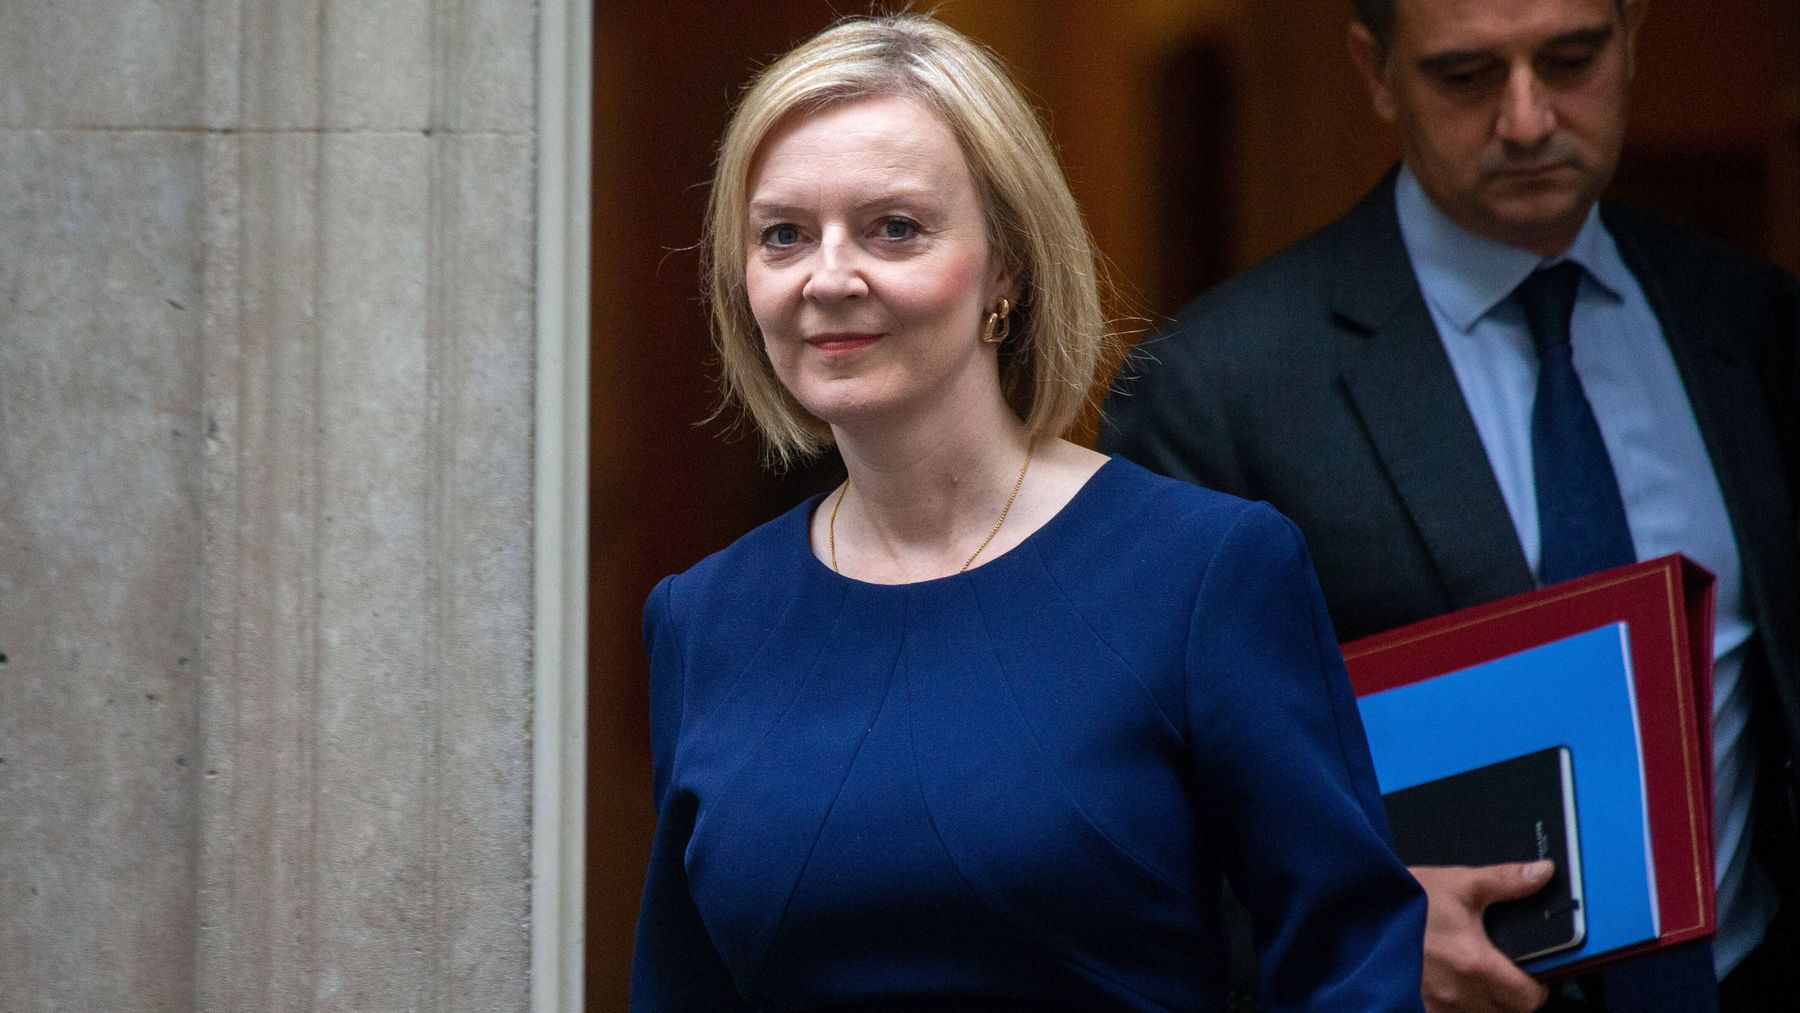 Liz Truss sacked as Secretary of State - "gross misconduct"